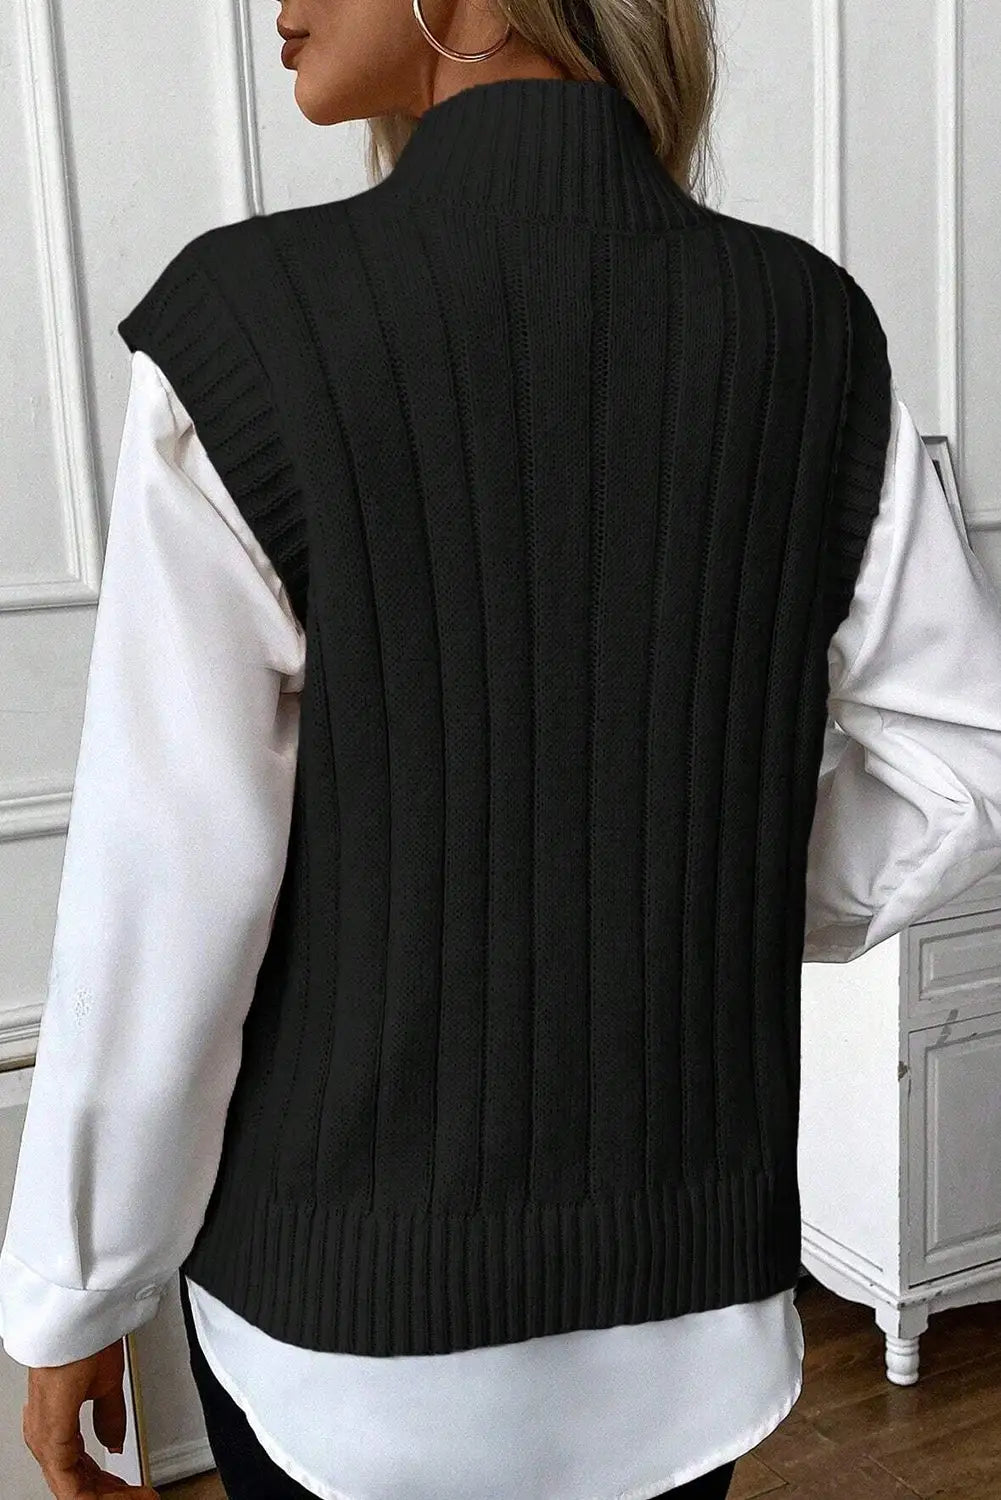 Black Cable Knit High Neck Sweater Vest-1